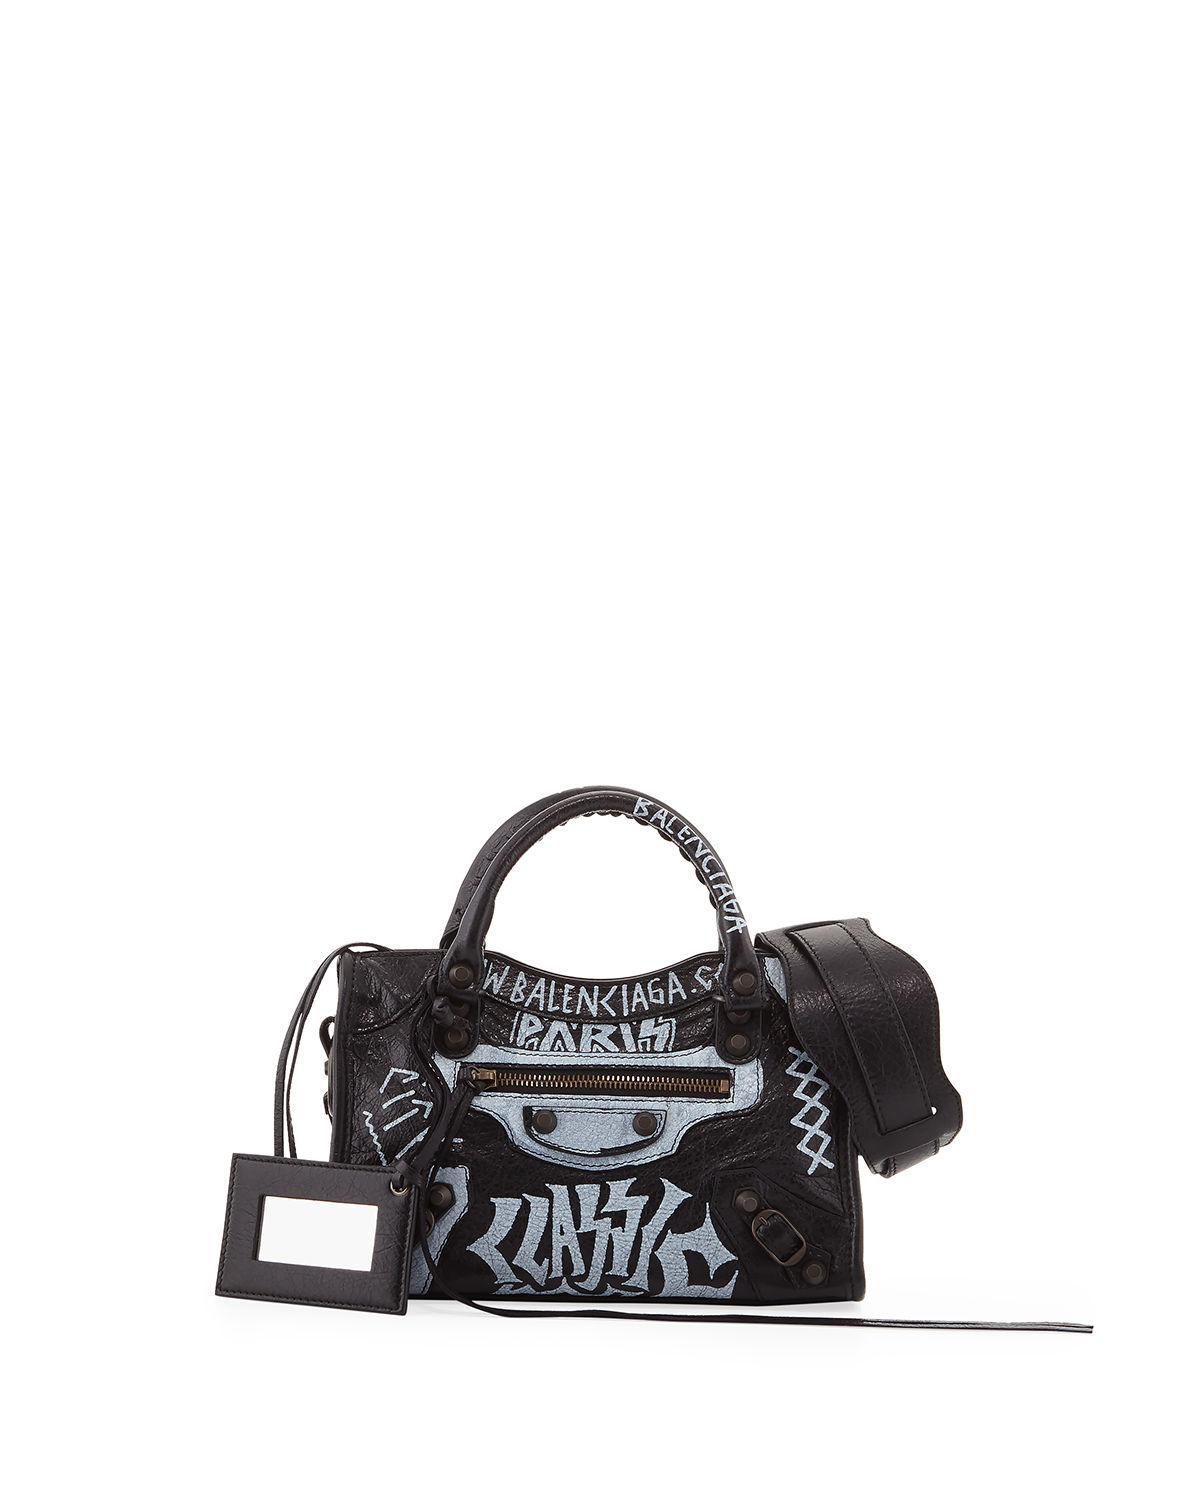 Balenciaga Mini City Graffiti-print Satchel Bag in Black - Lyst